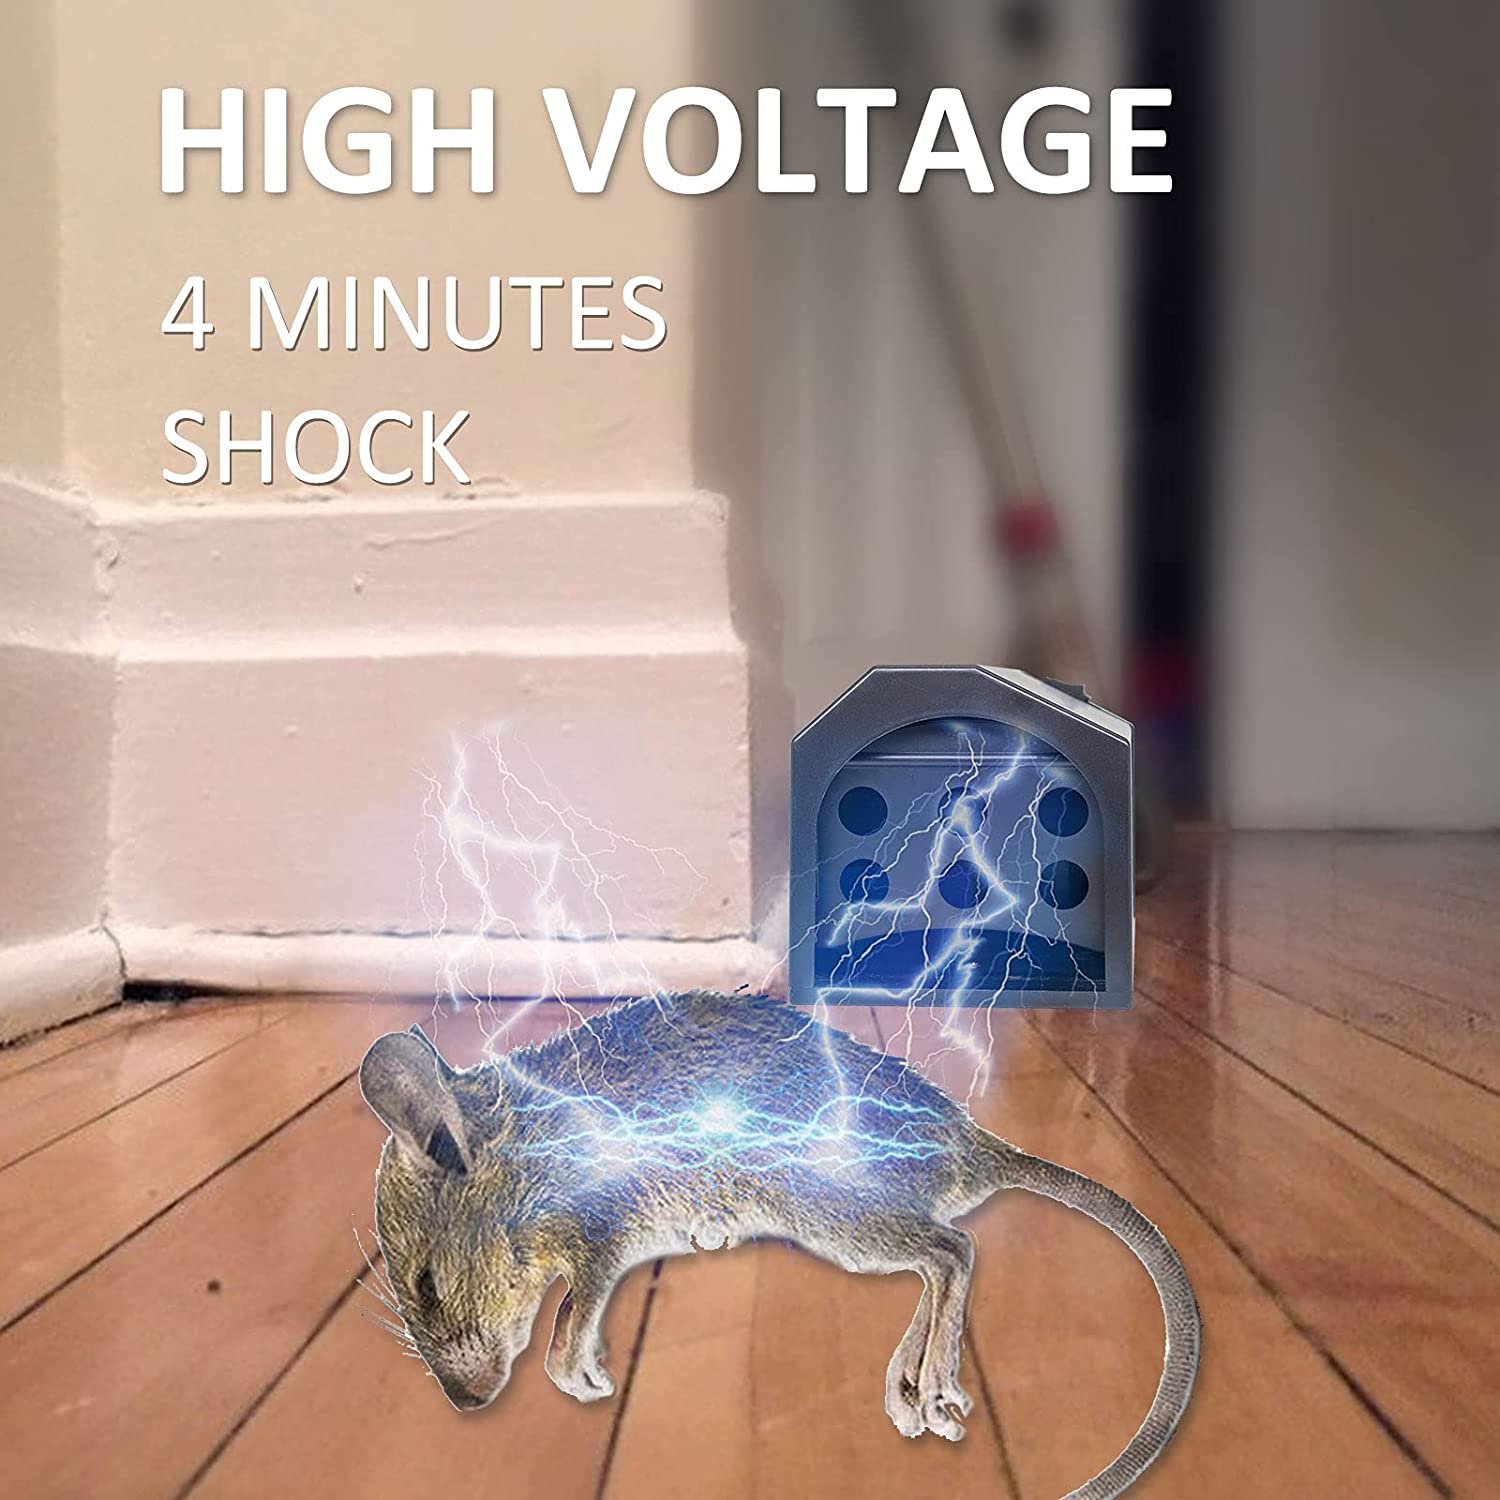 Electronic Rat Trap - Thanos Home